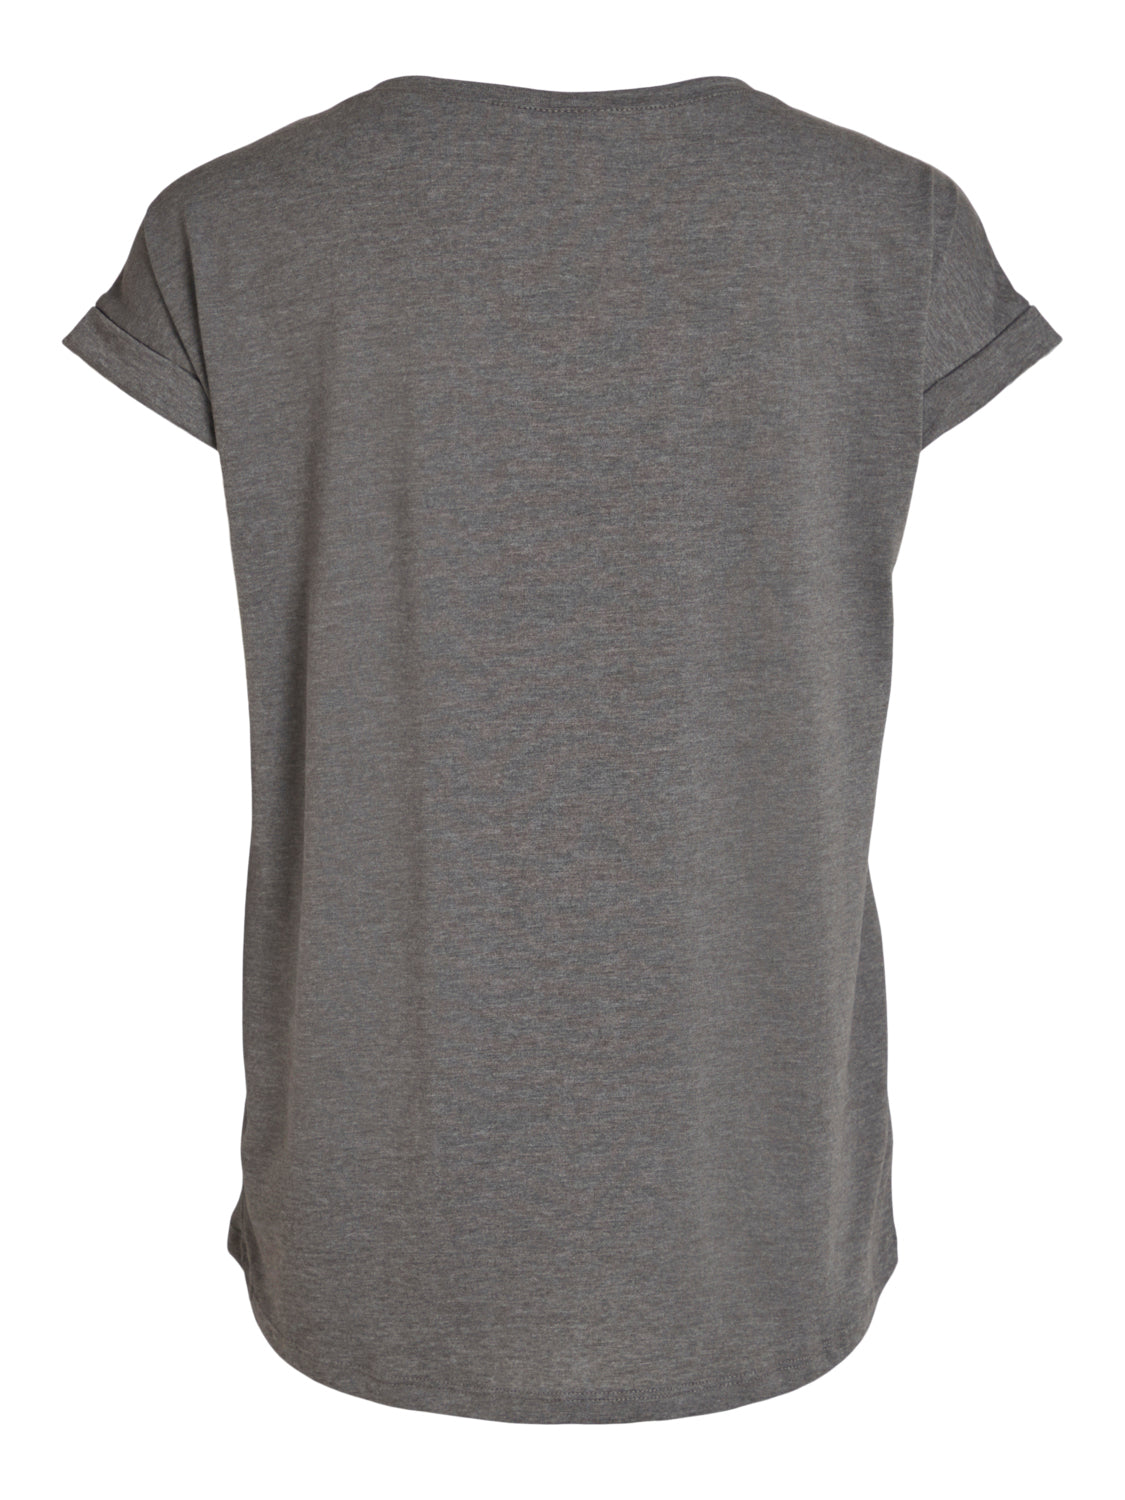 VIDREAMERS T-shirts & Tops - Medium Grey Melange